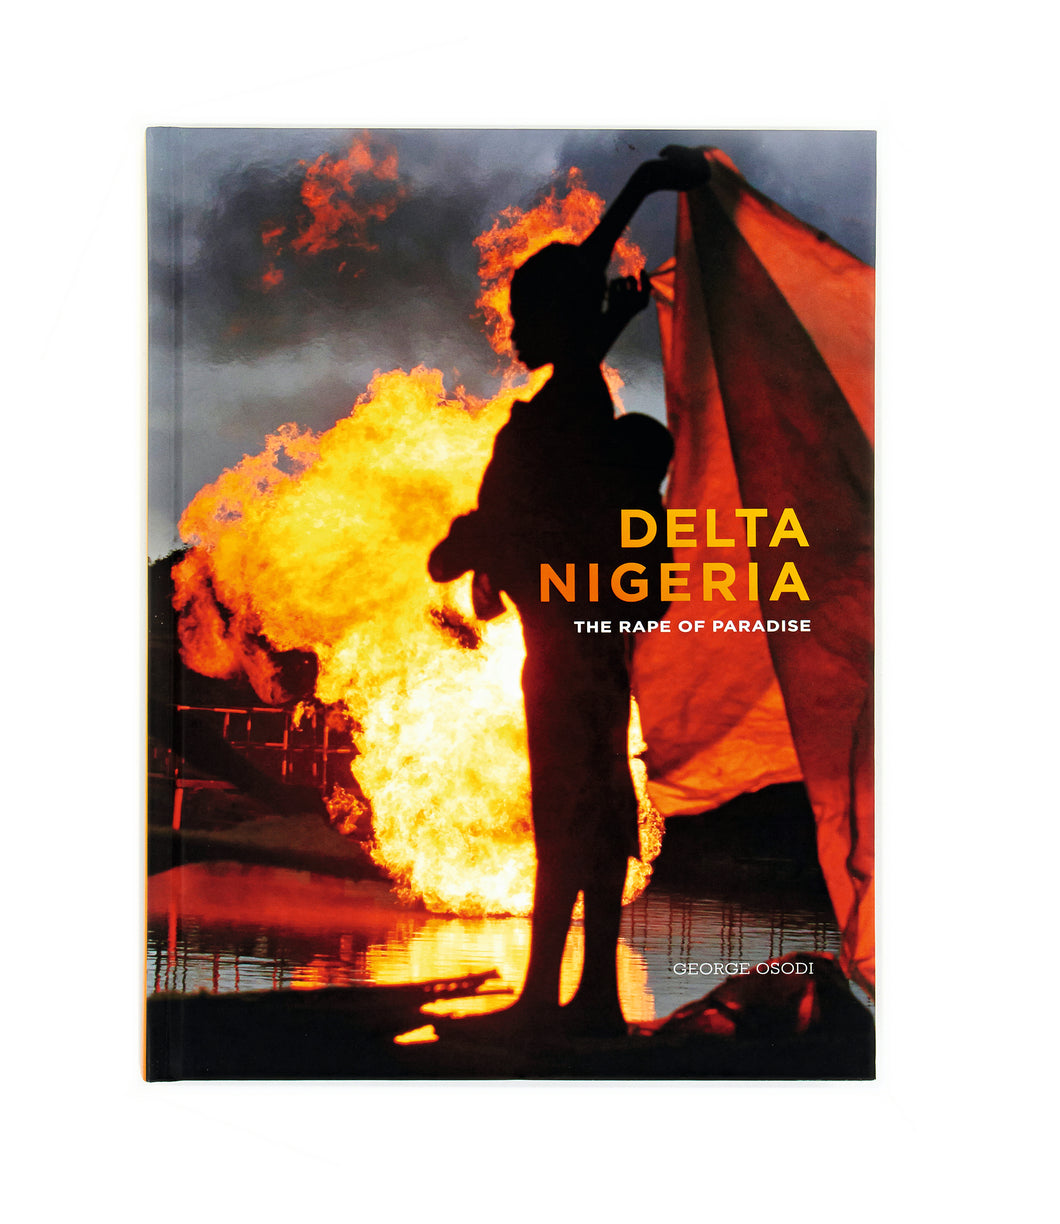 DELTA NIGERIA - THE RAPE OF PARADISE by George Osodi